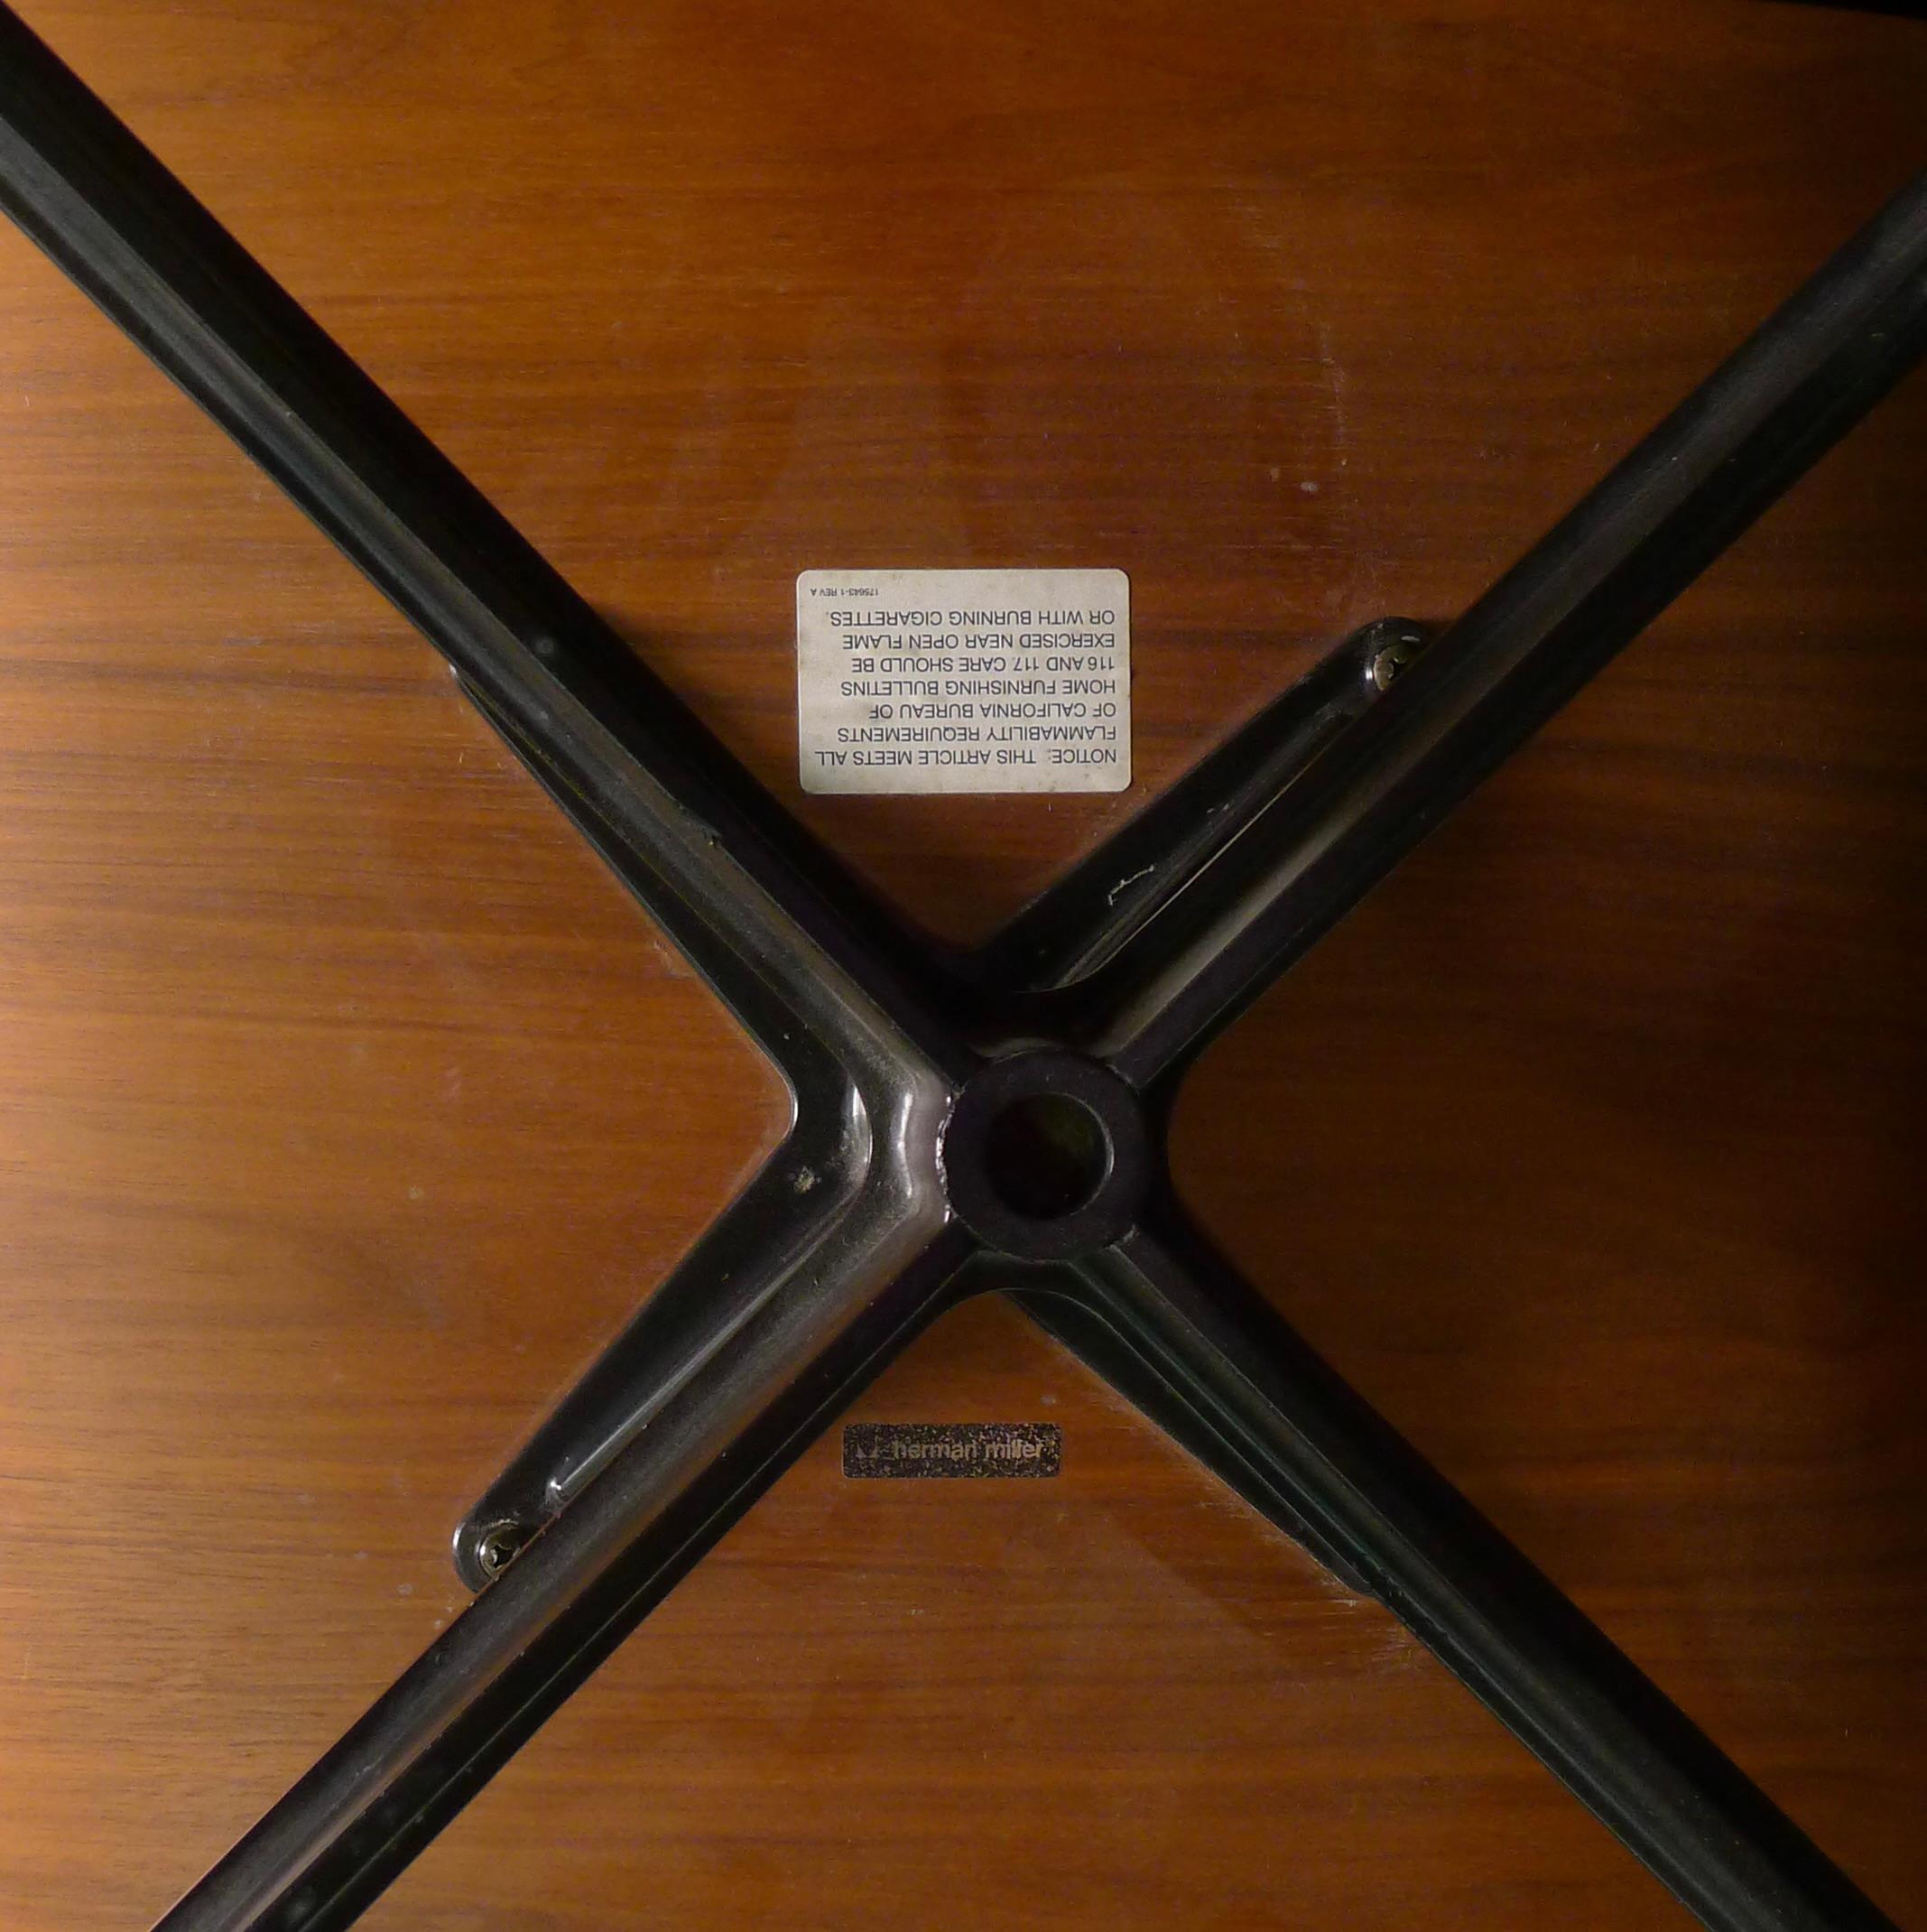 Eames Lounge Chair and Ottoman, model 670/671, Herman Miller, USA 2